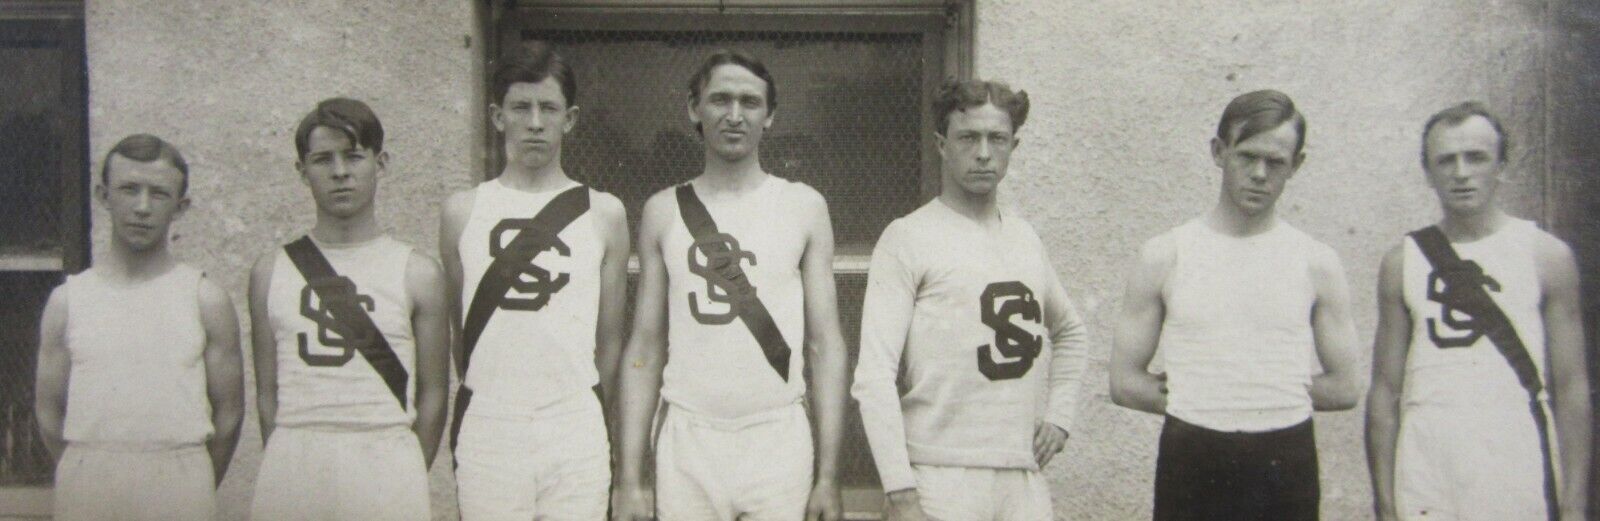 Vintage USC Trojans Track Team Photo University Southern California c. 1920's